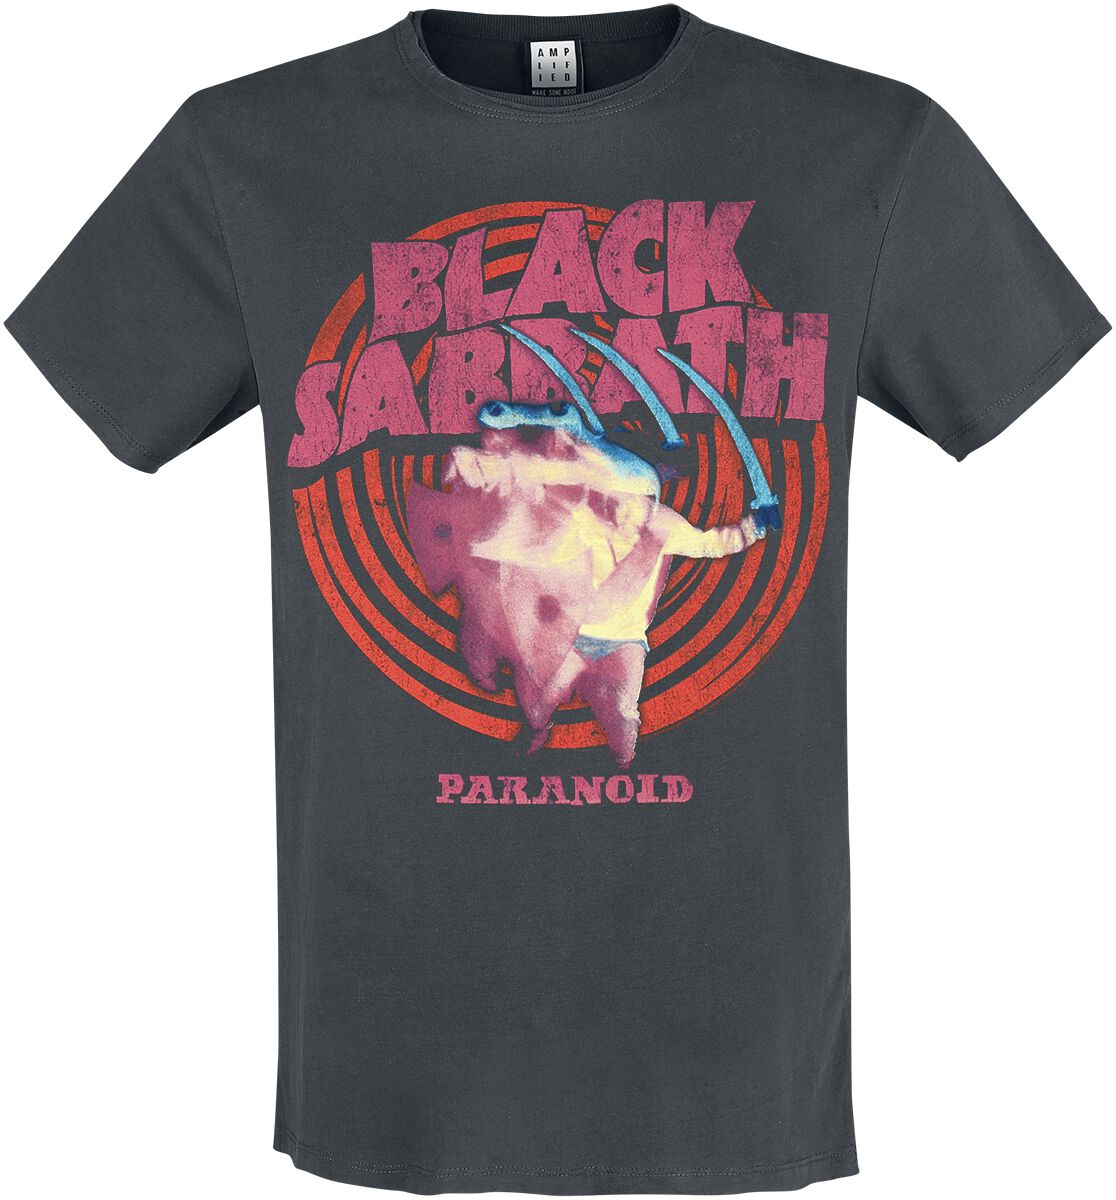 Amplified Collection Paranoid | Black Sabbath T-Shirt | EMP